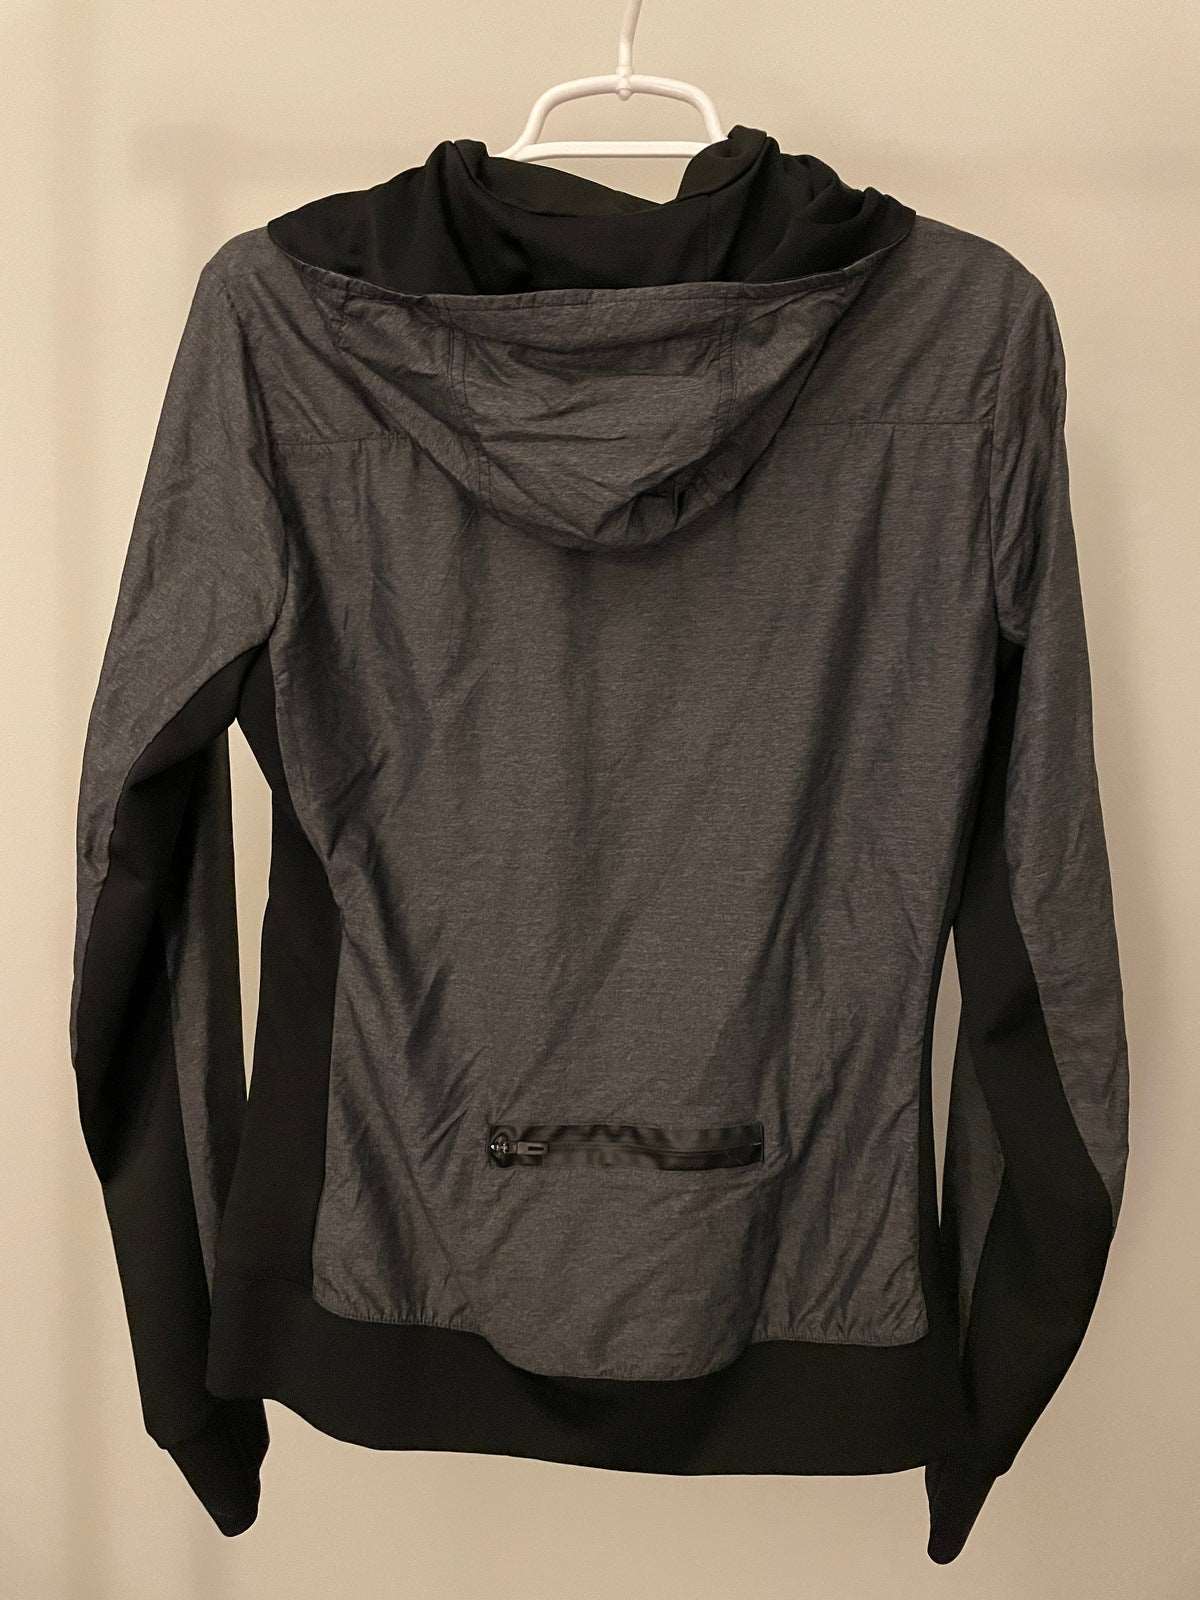 ThriftedEquestrian Clothing Medium Adidas Zip Up Jacket - Medium